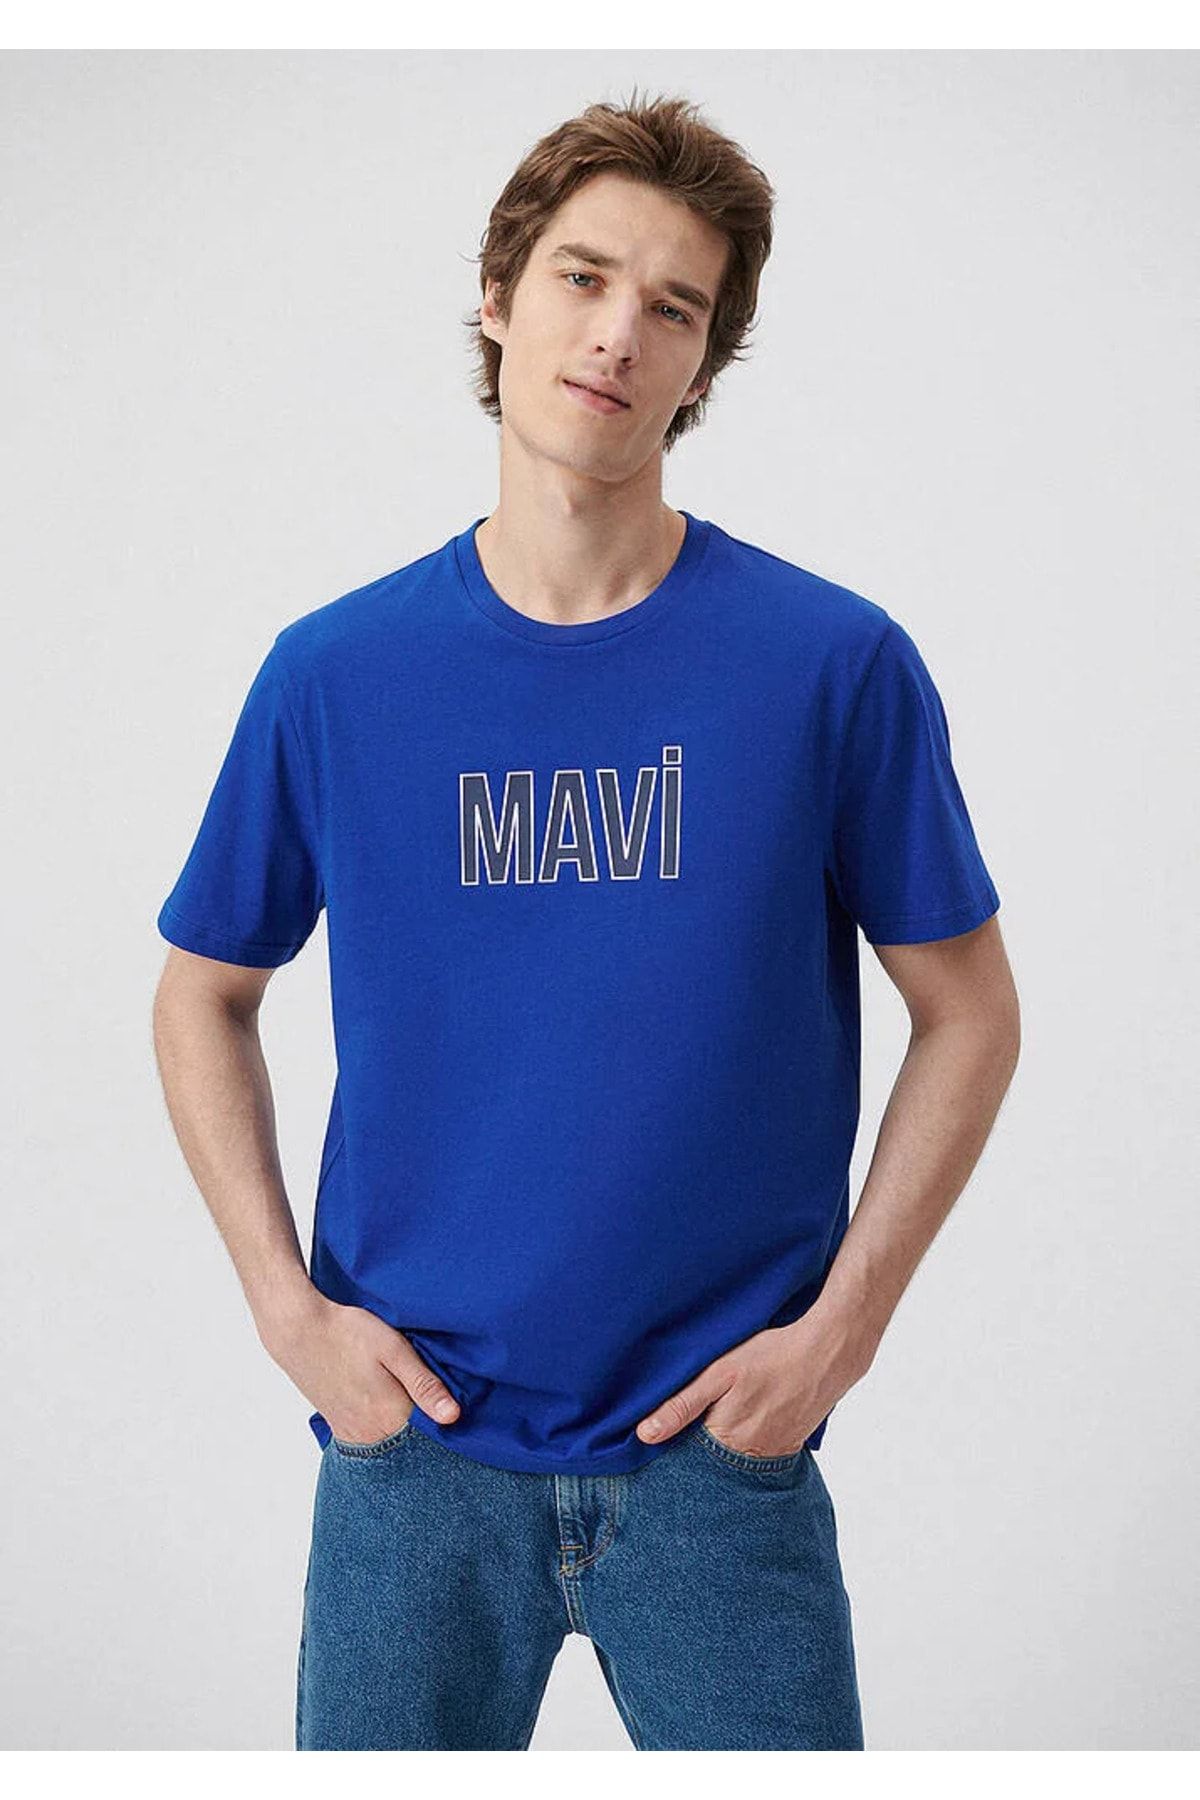 Mavi آرم چاپ شده تی شرت آبی به طور منظم / برش معمولی 066842-70896